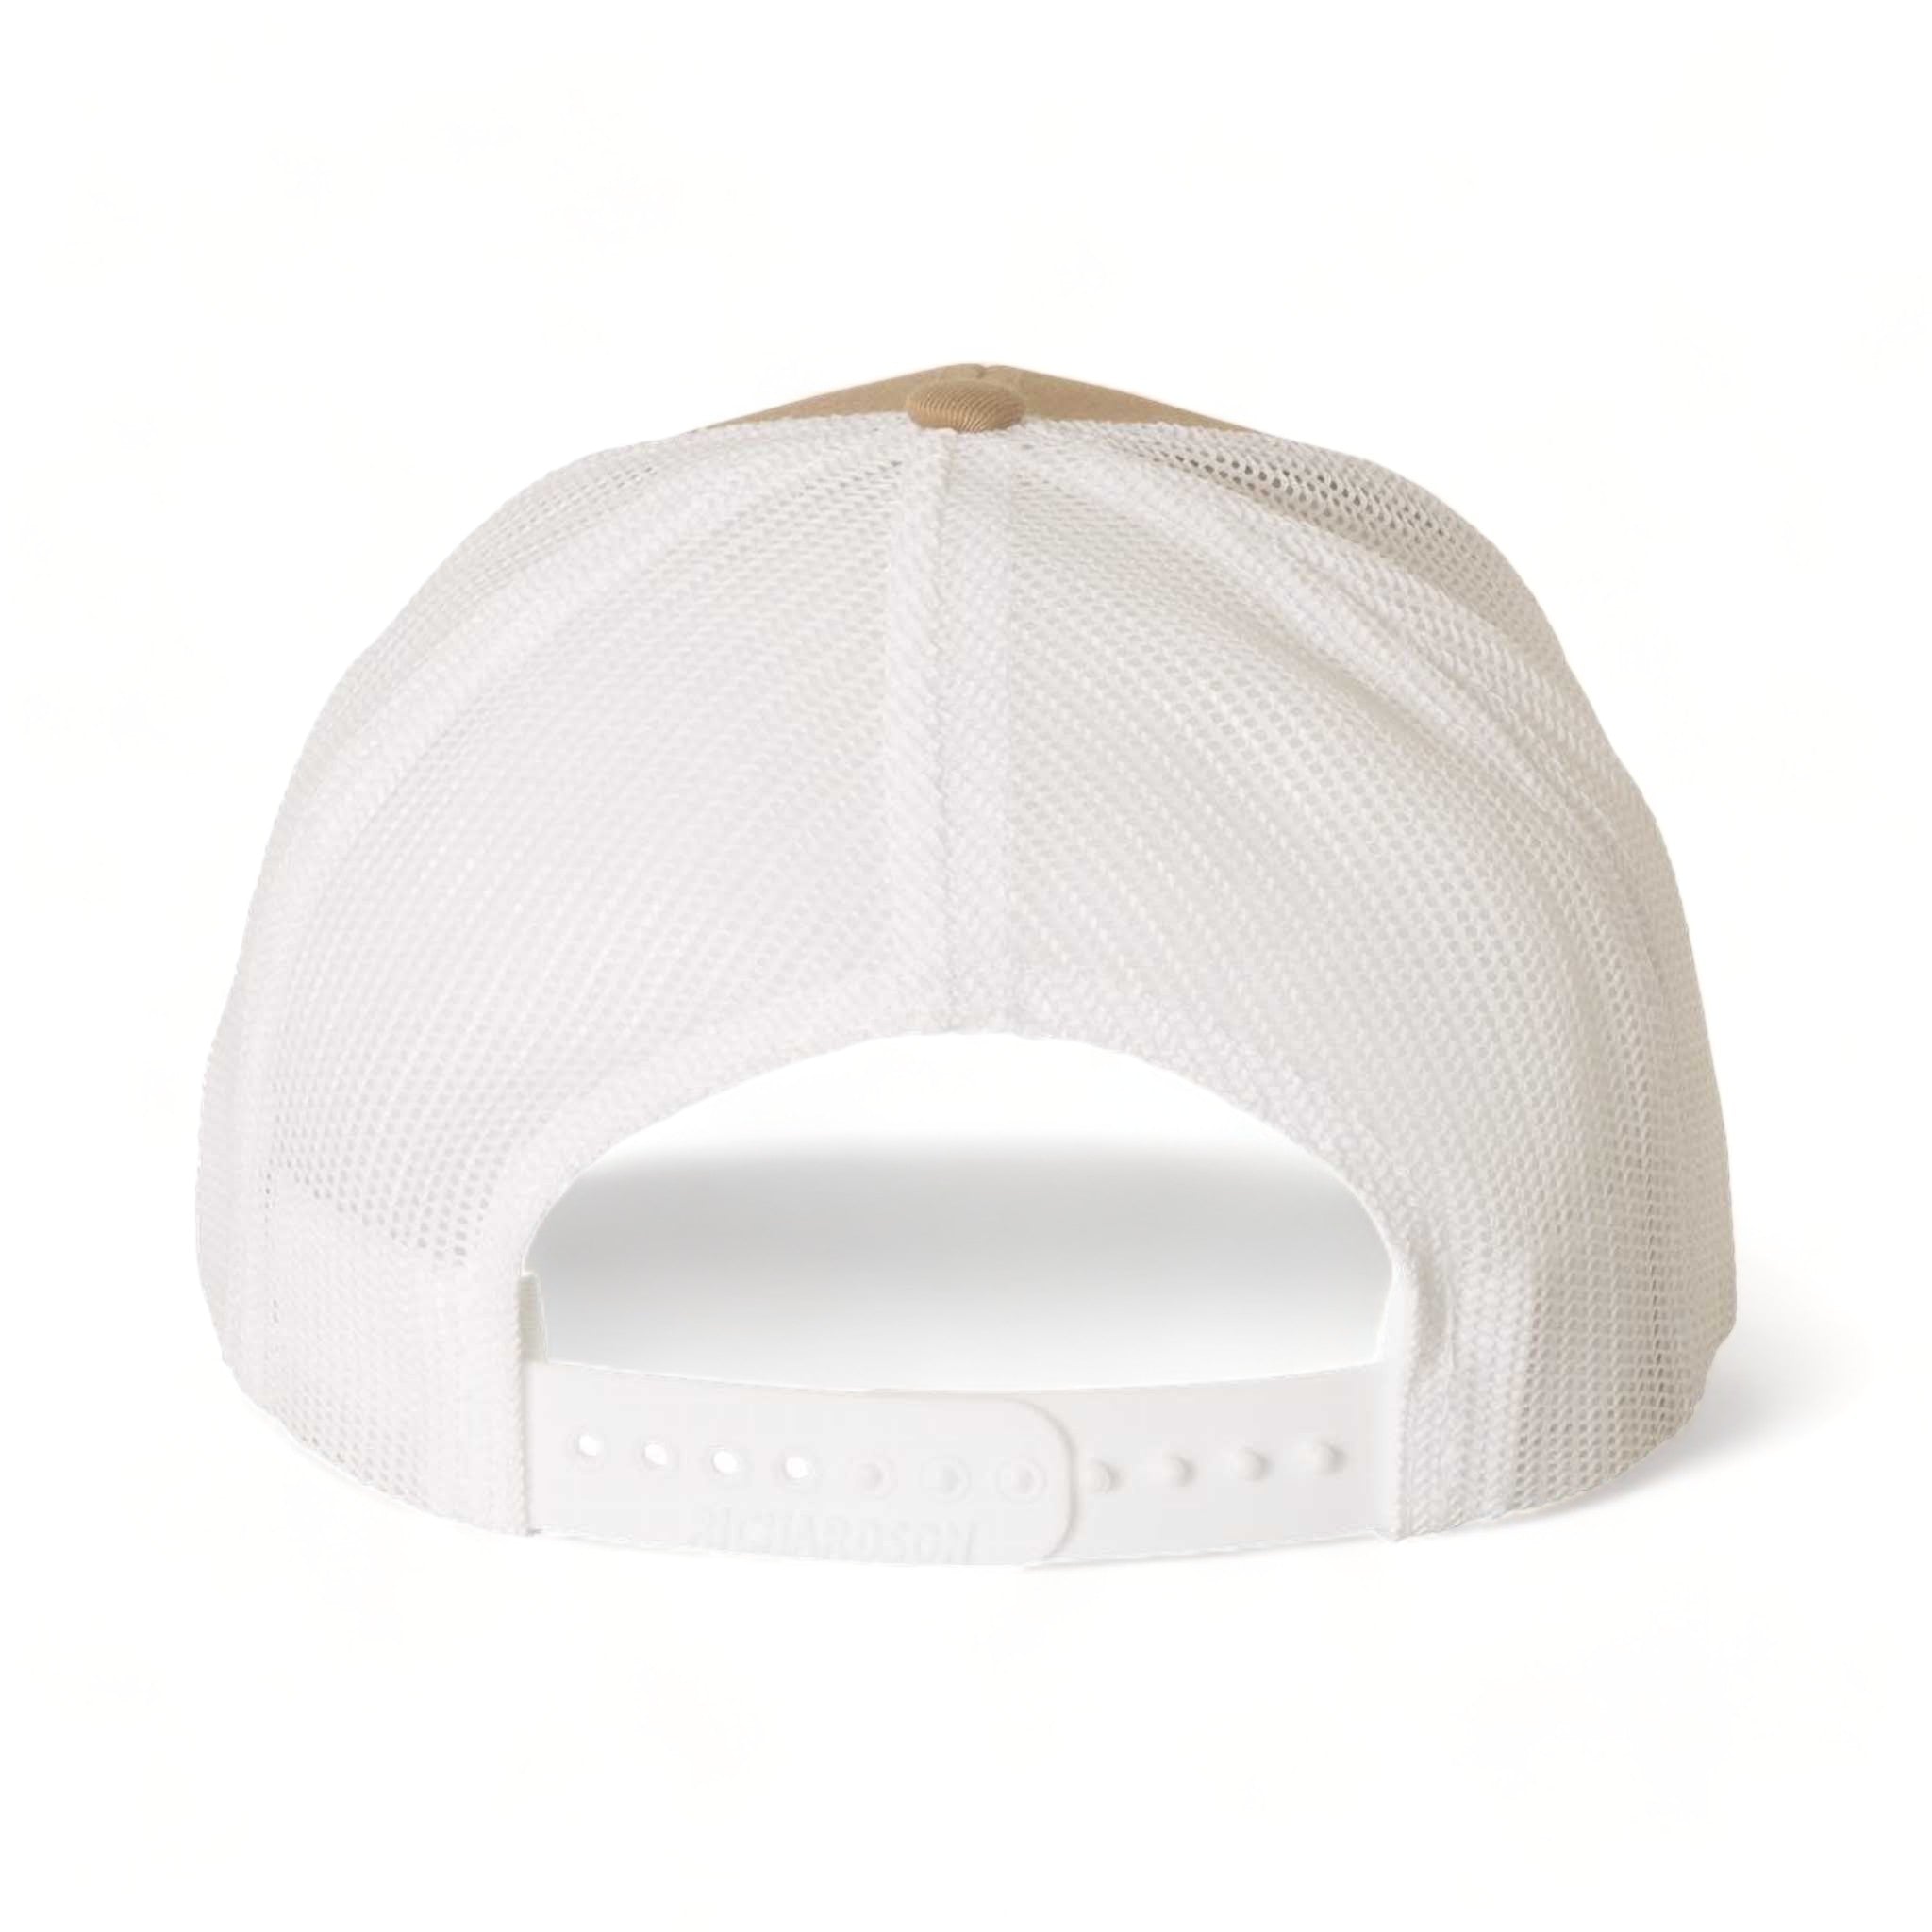 Back view of Richardson 112 custom hat in khaki and white